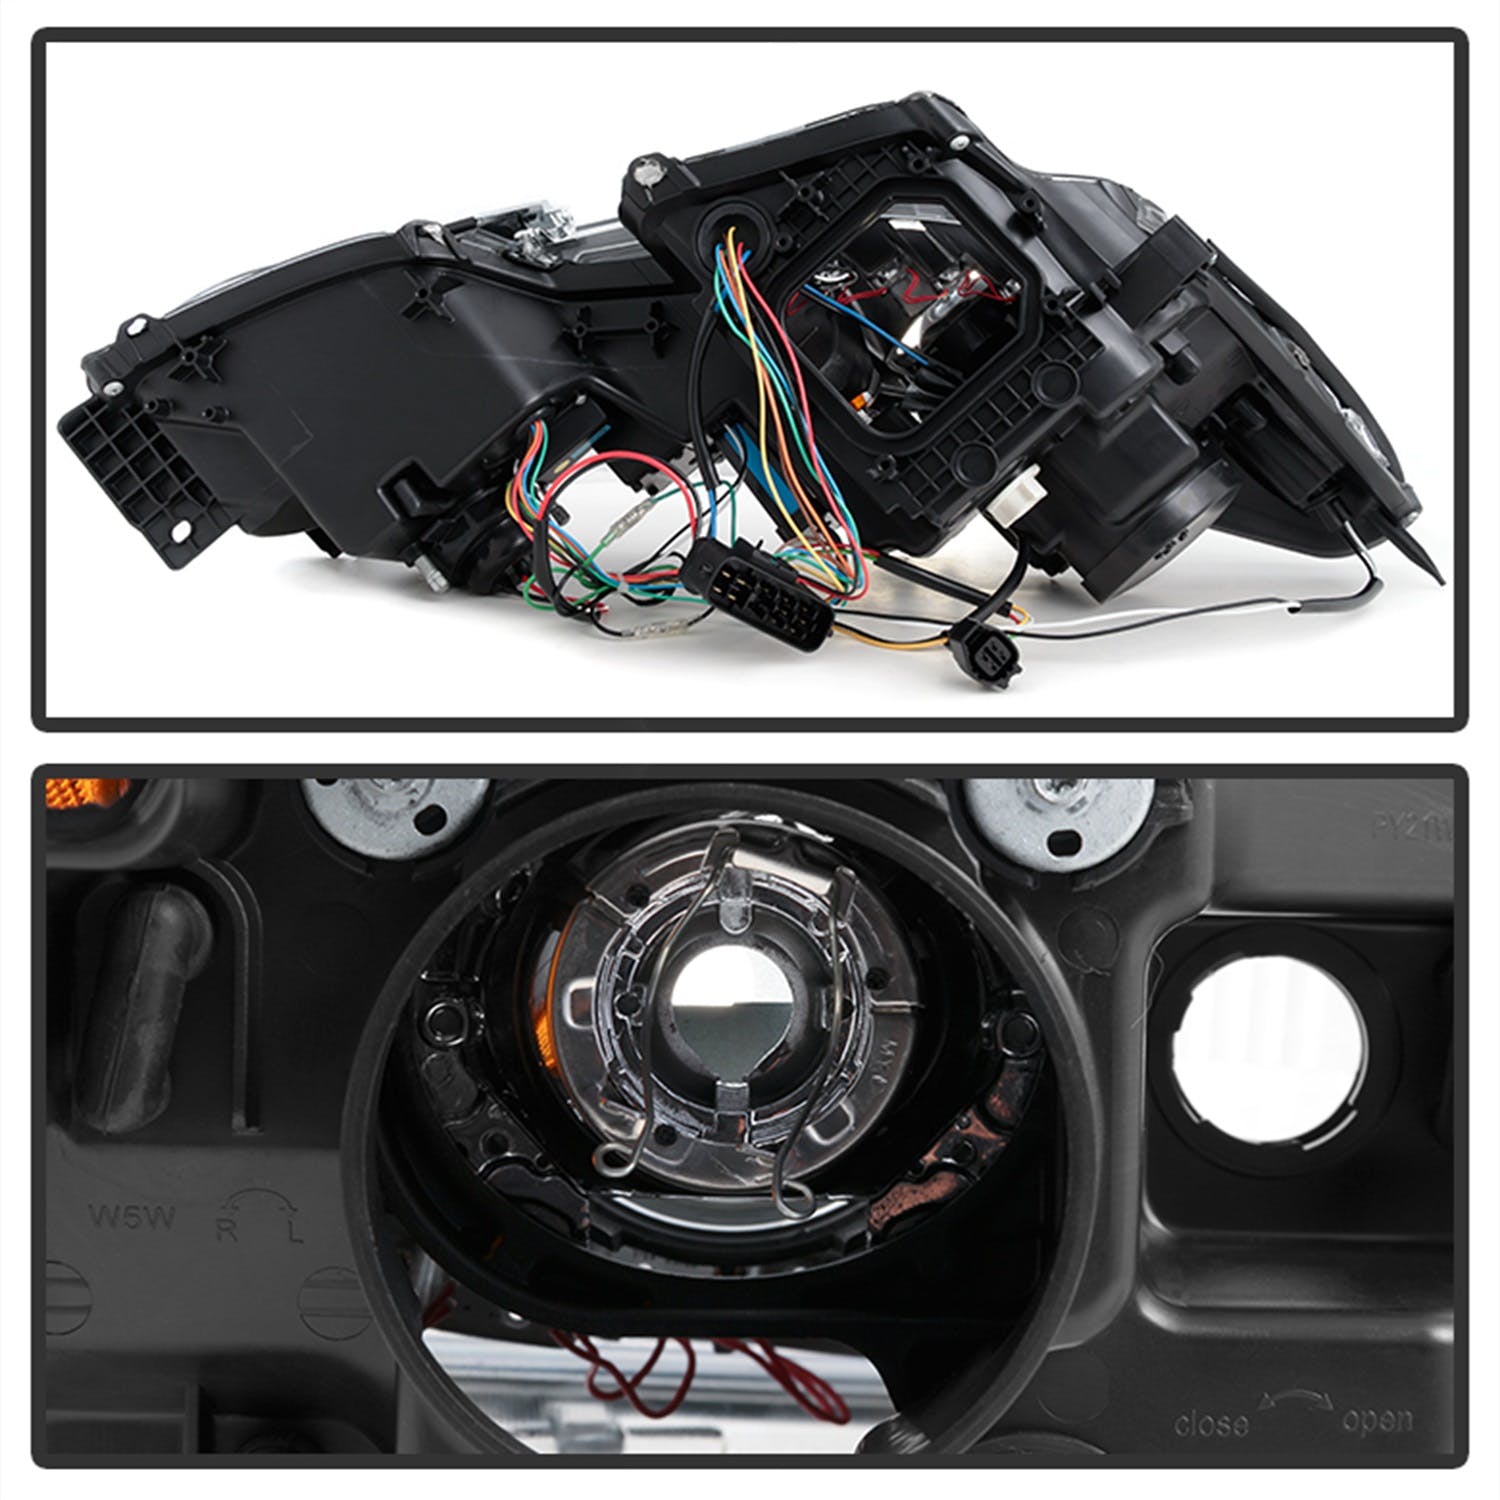 Spyder Auto 5082800 (Spyder) Lexus GS 300/350/450/460 2006-2011 Projector Headlights-Xenon/HID Model